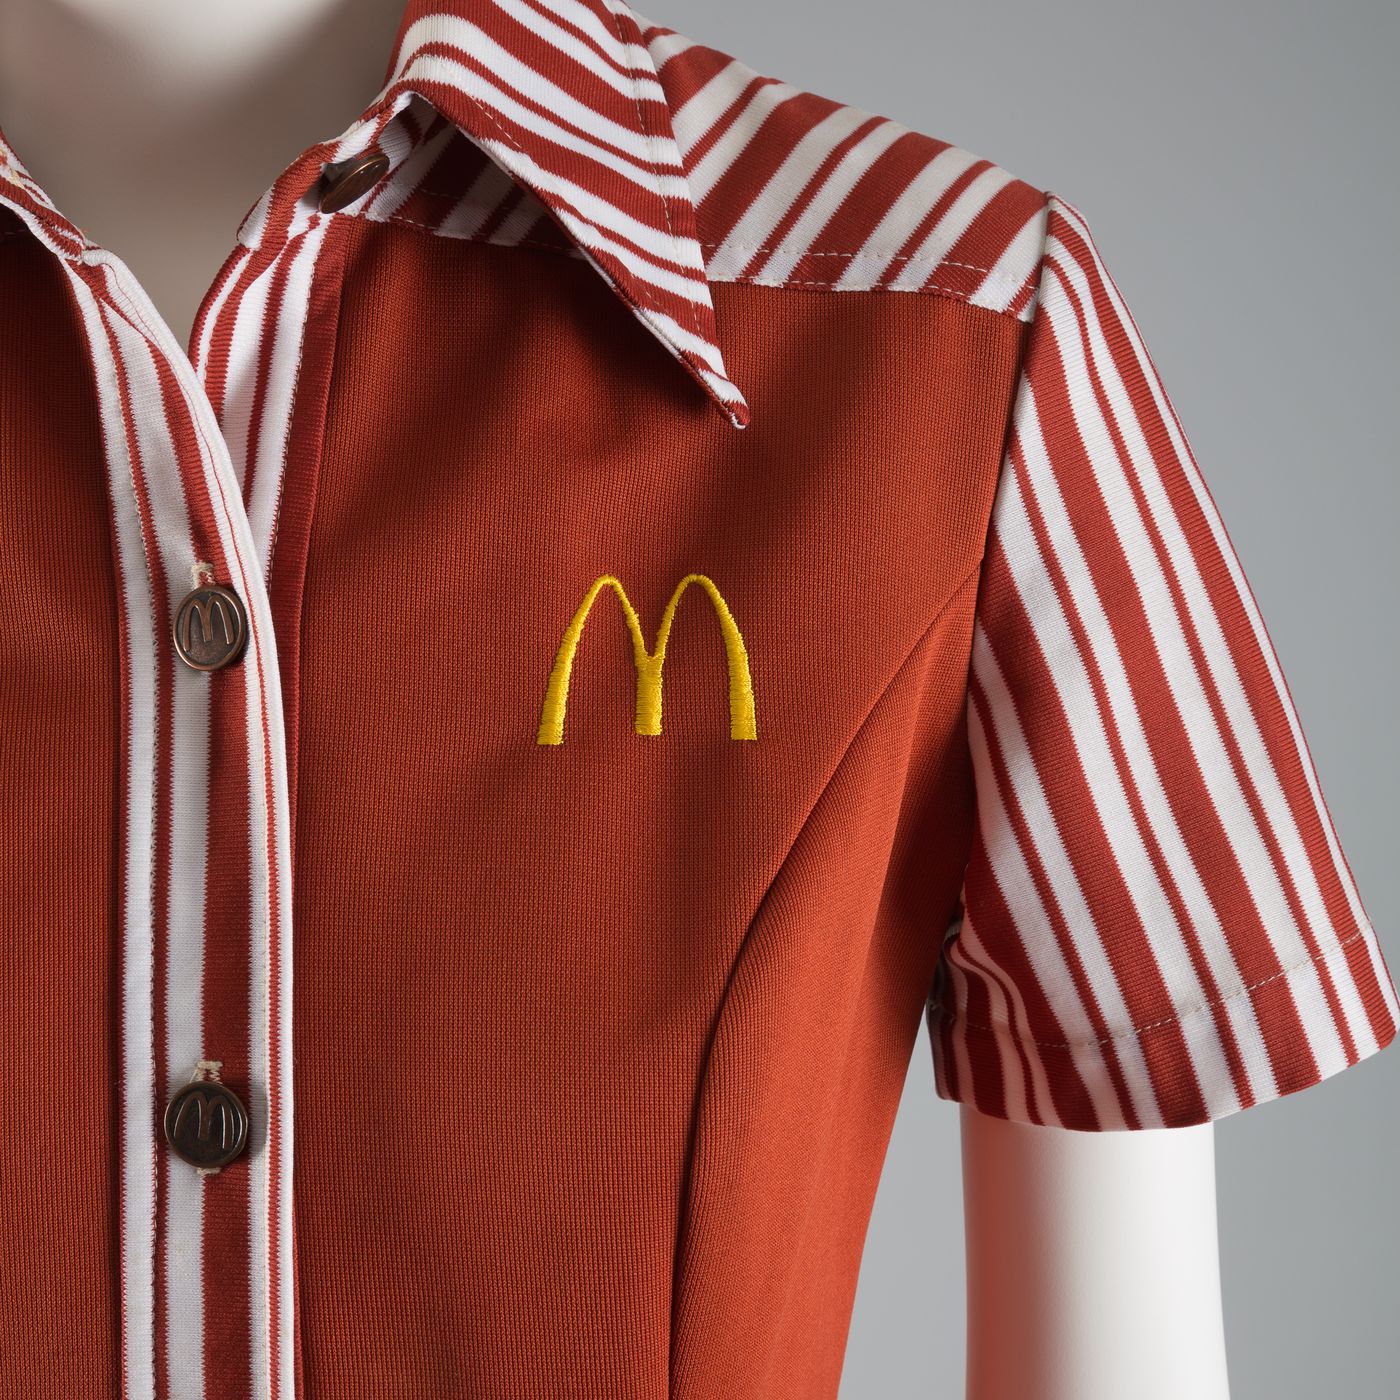 Uniform catalog manager mcdonalds McDonald’s Uniforms